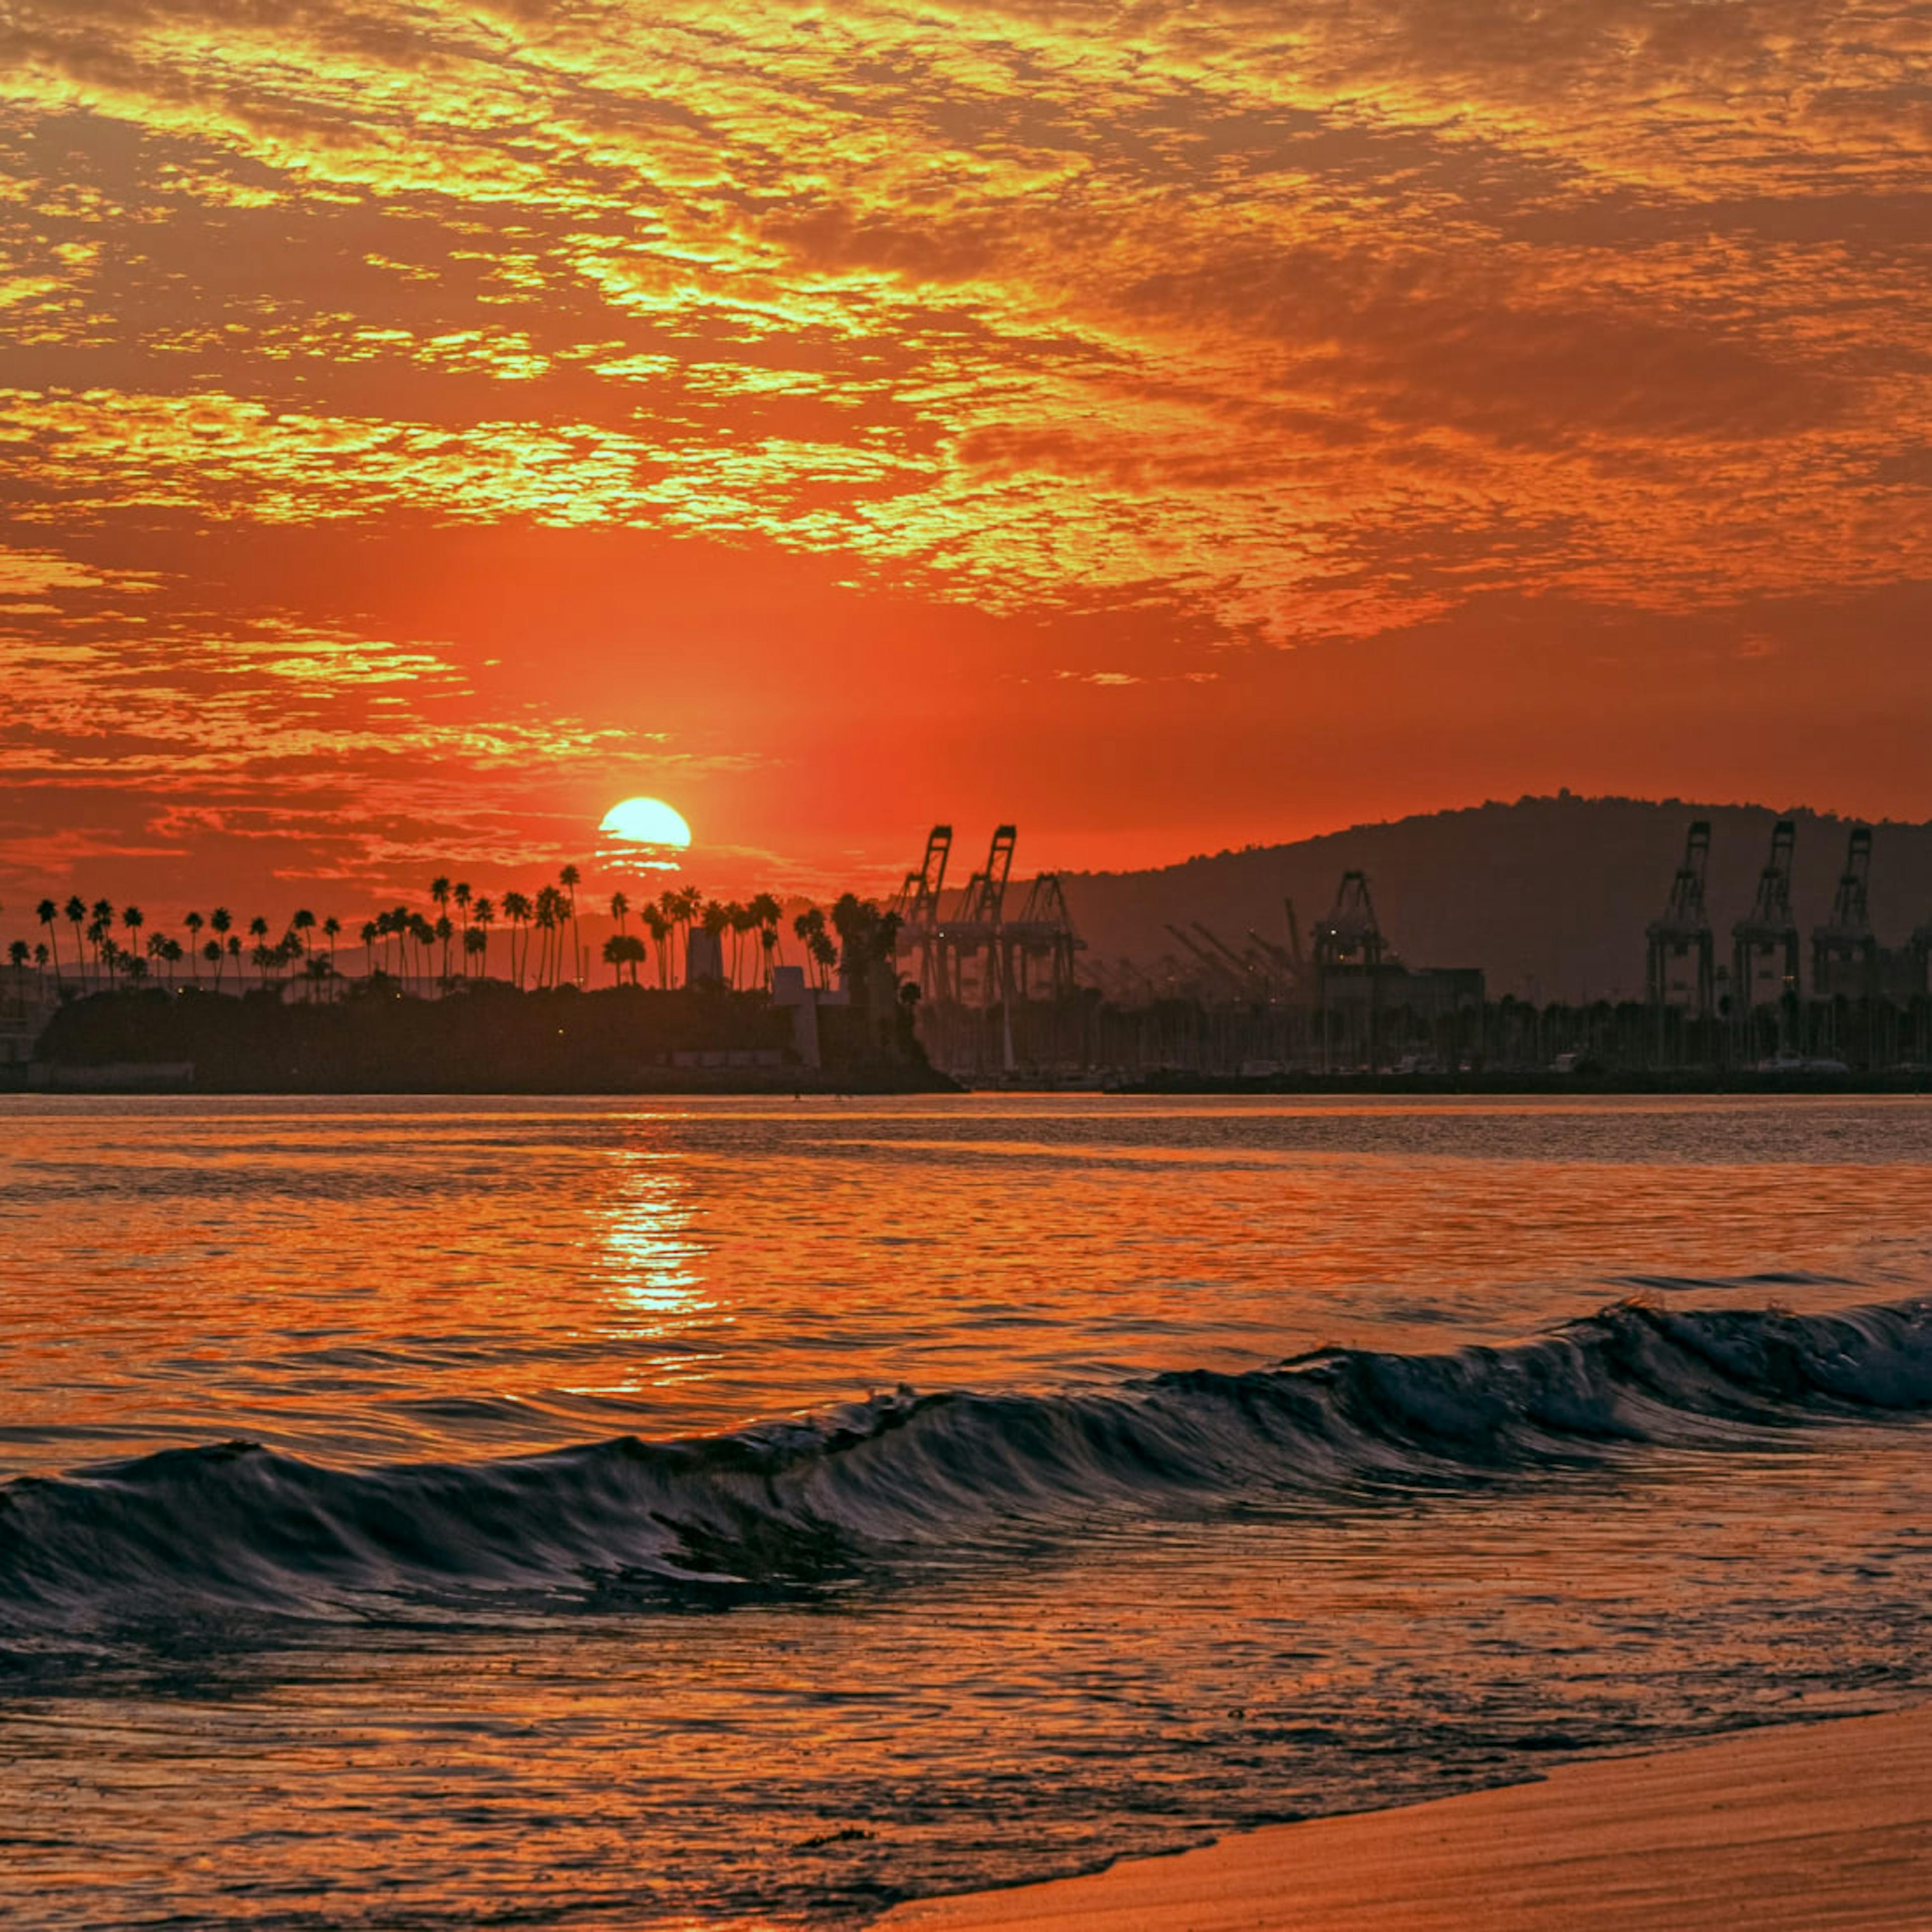 Long Beach, CA at sunset.